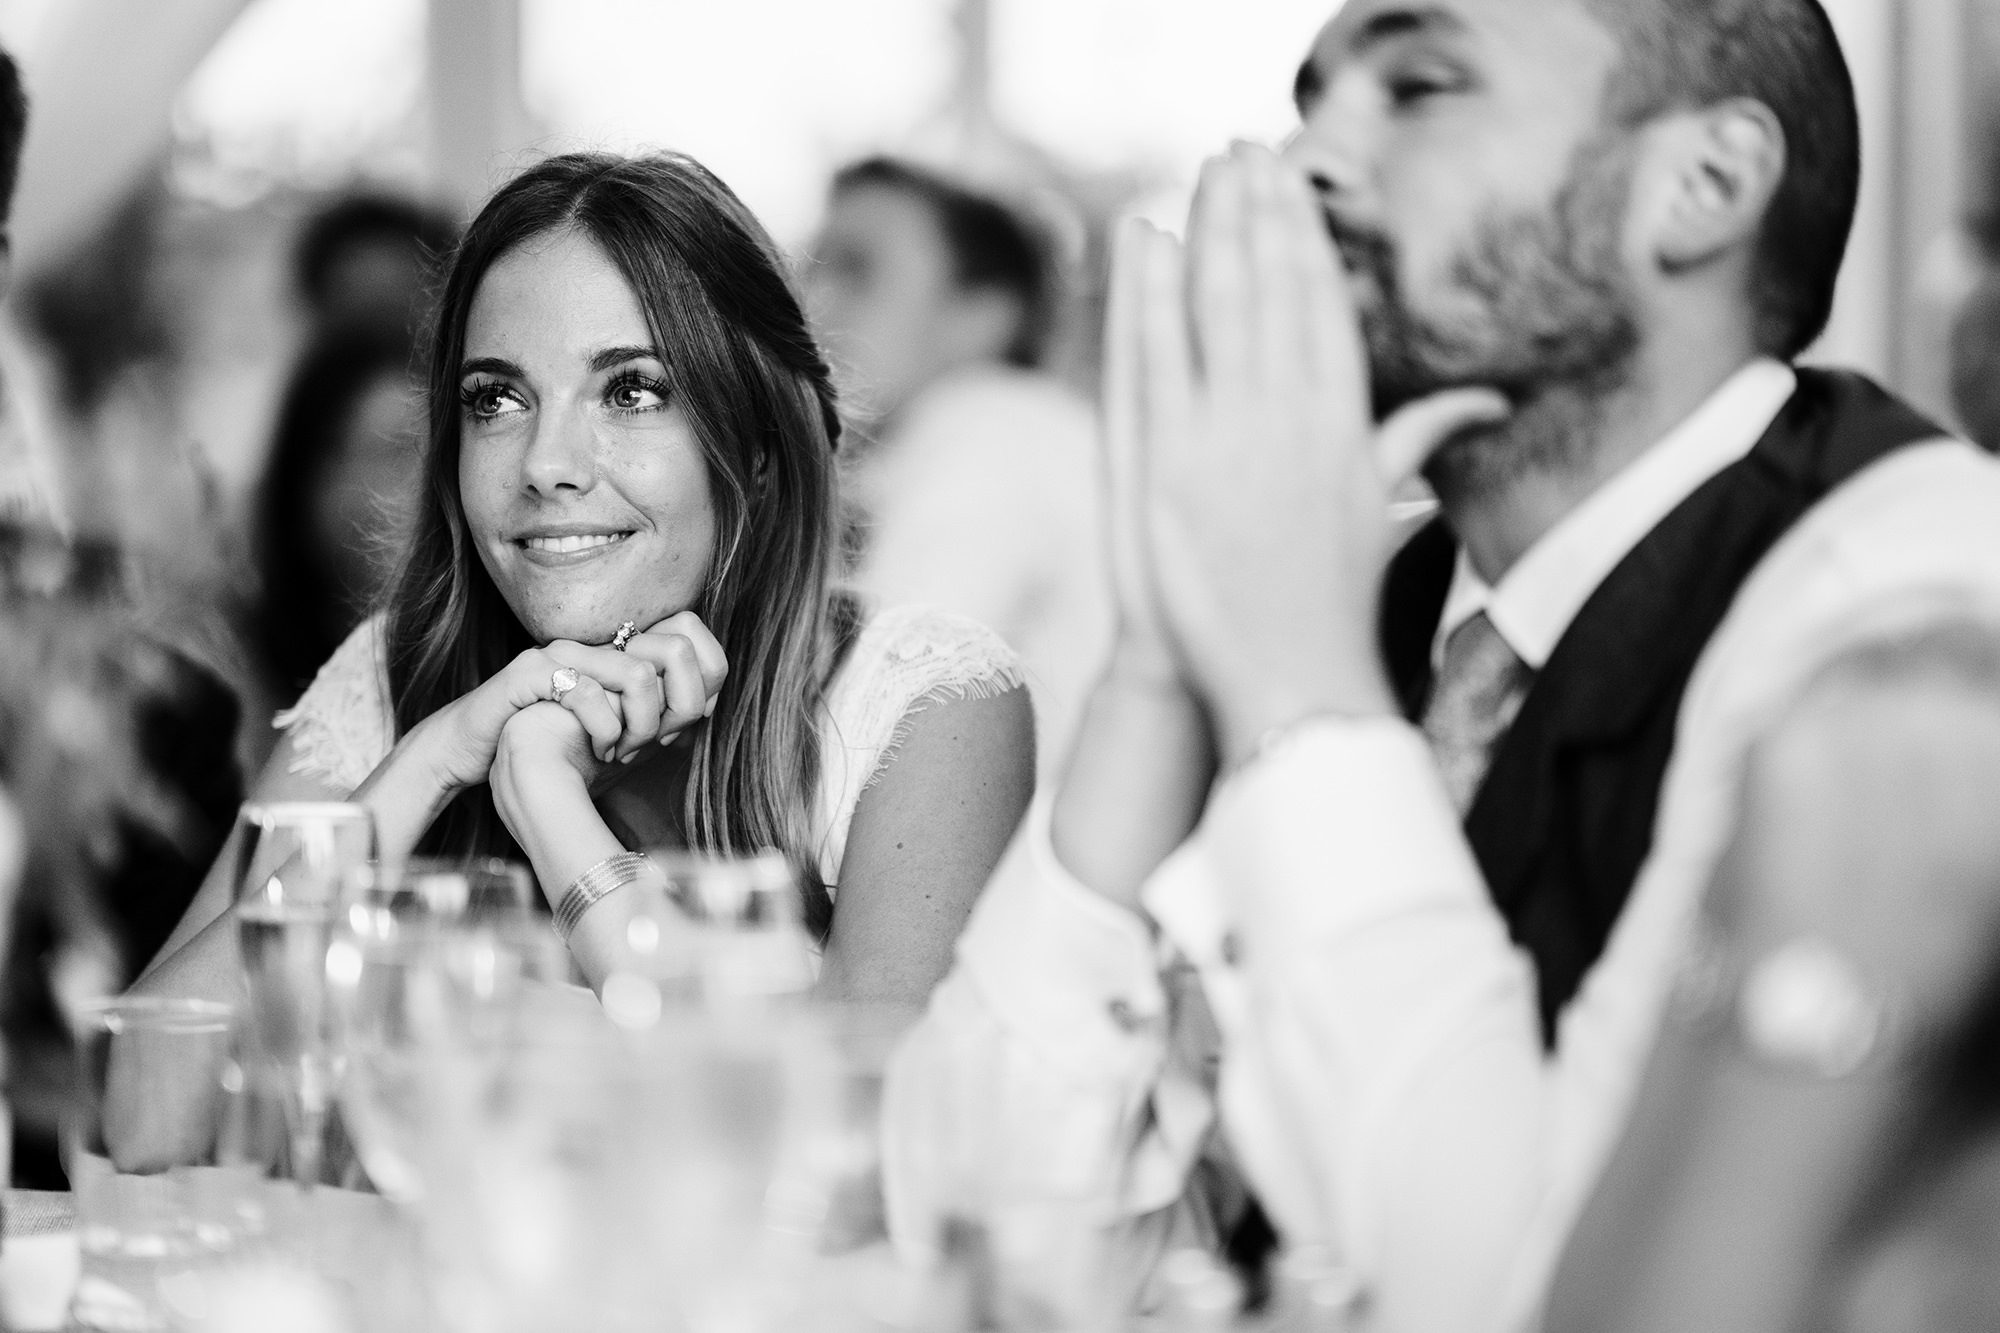 bridesmaid looks emotional during London wedding speeches